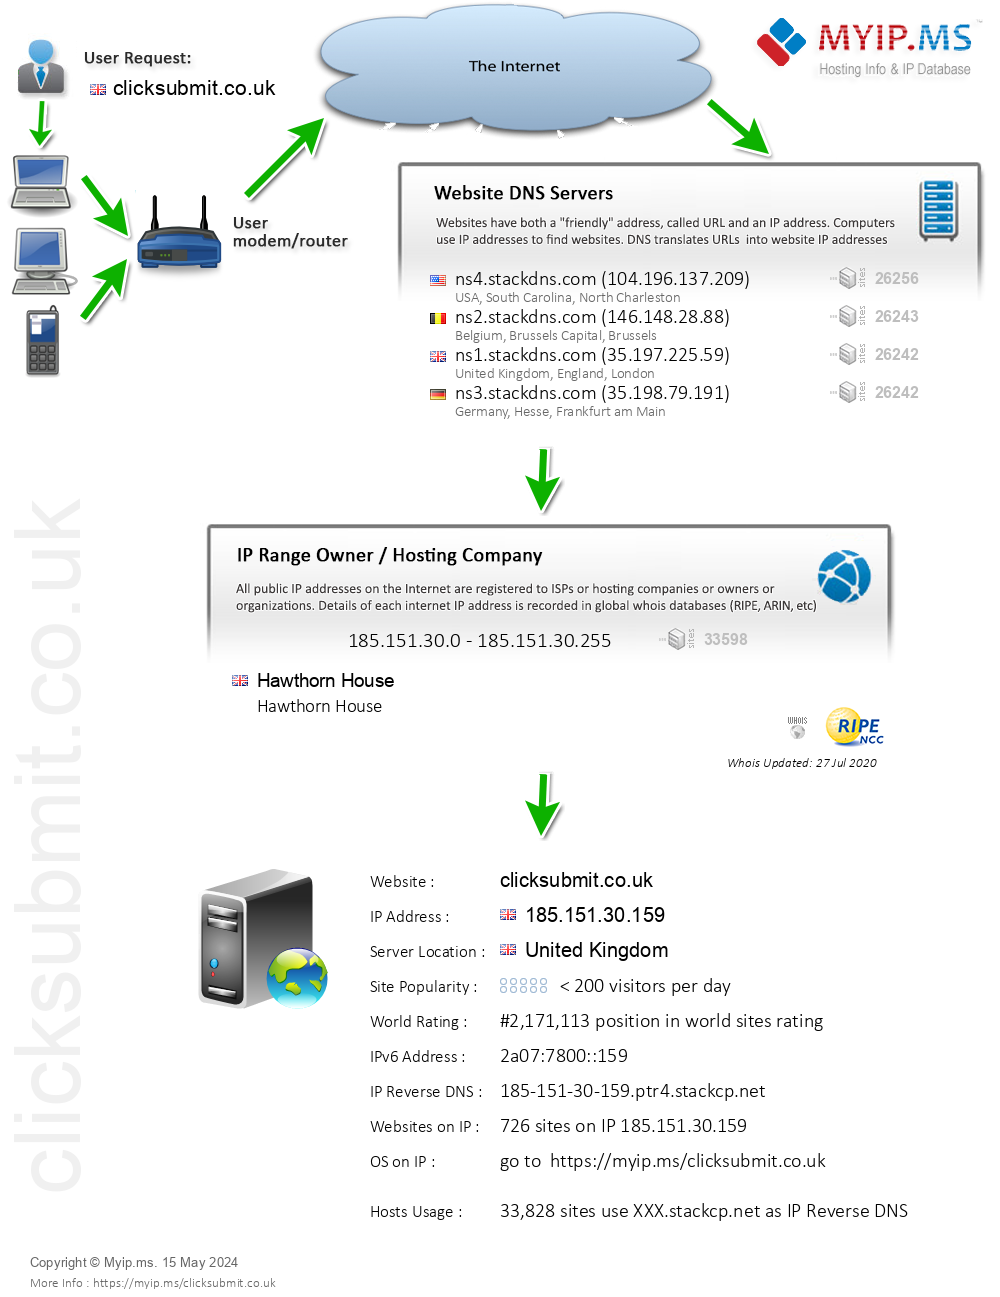 Clicksubmit.co.uk - Website Hosting Visual IP Diagram